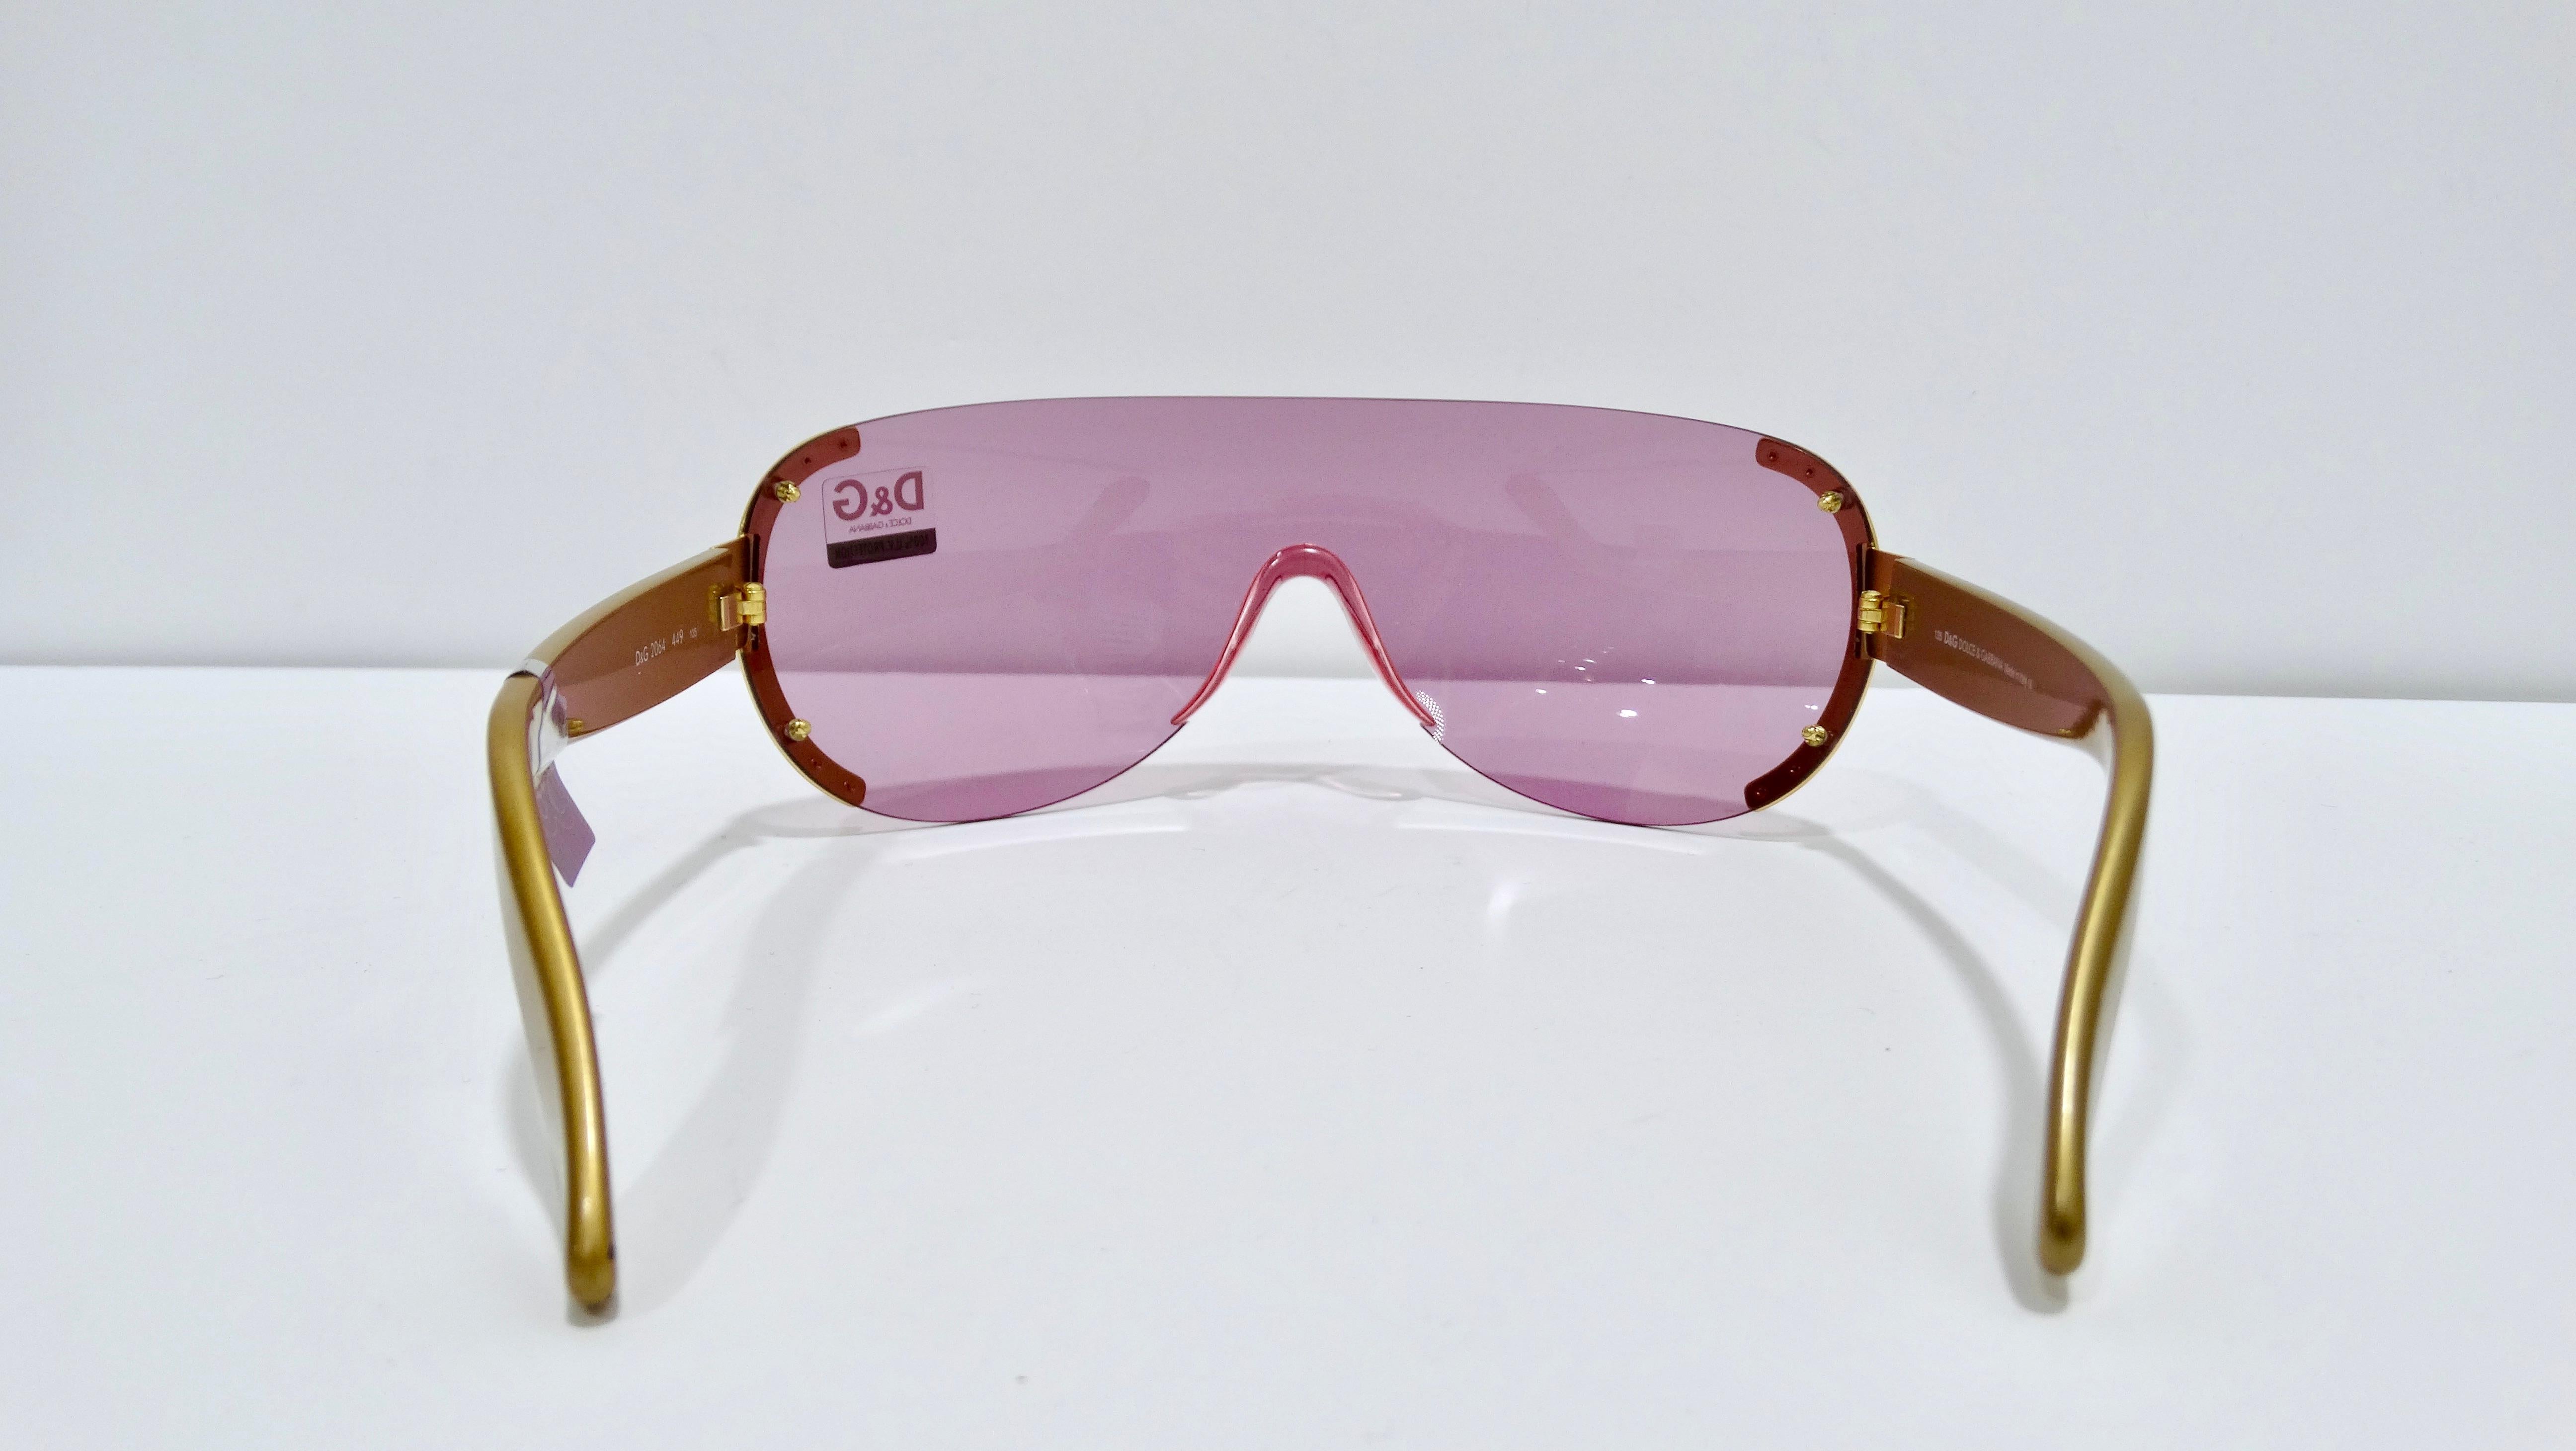 d&g shield sunglasses